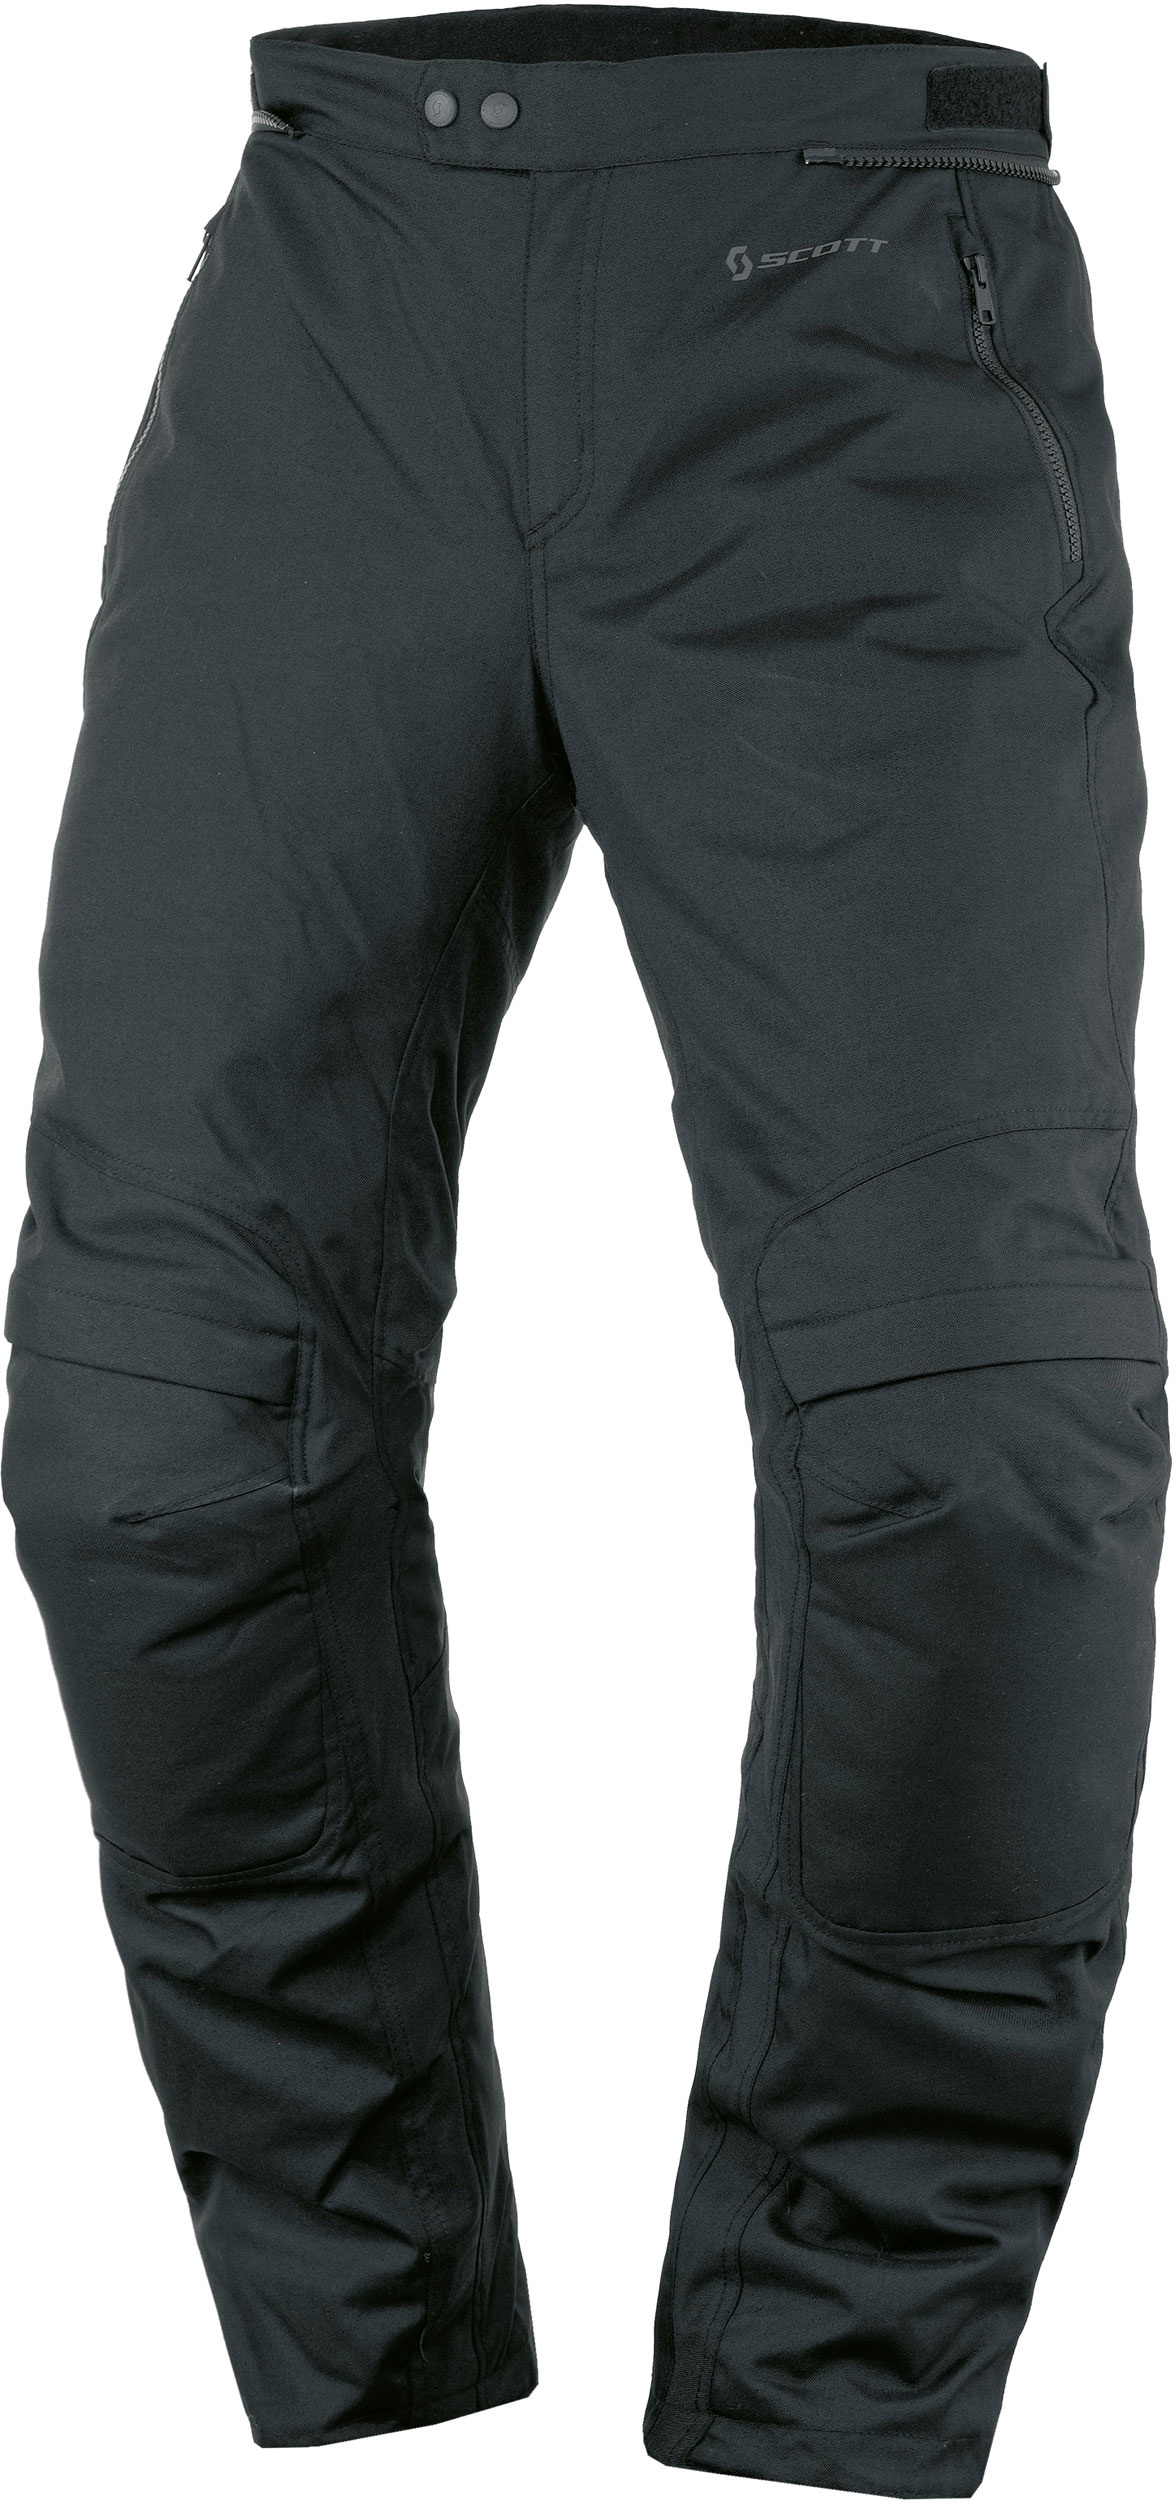 Scott Turn ADV DP, pantalons textile Dryosphere - Noir - 3XL